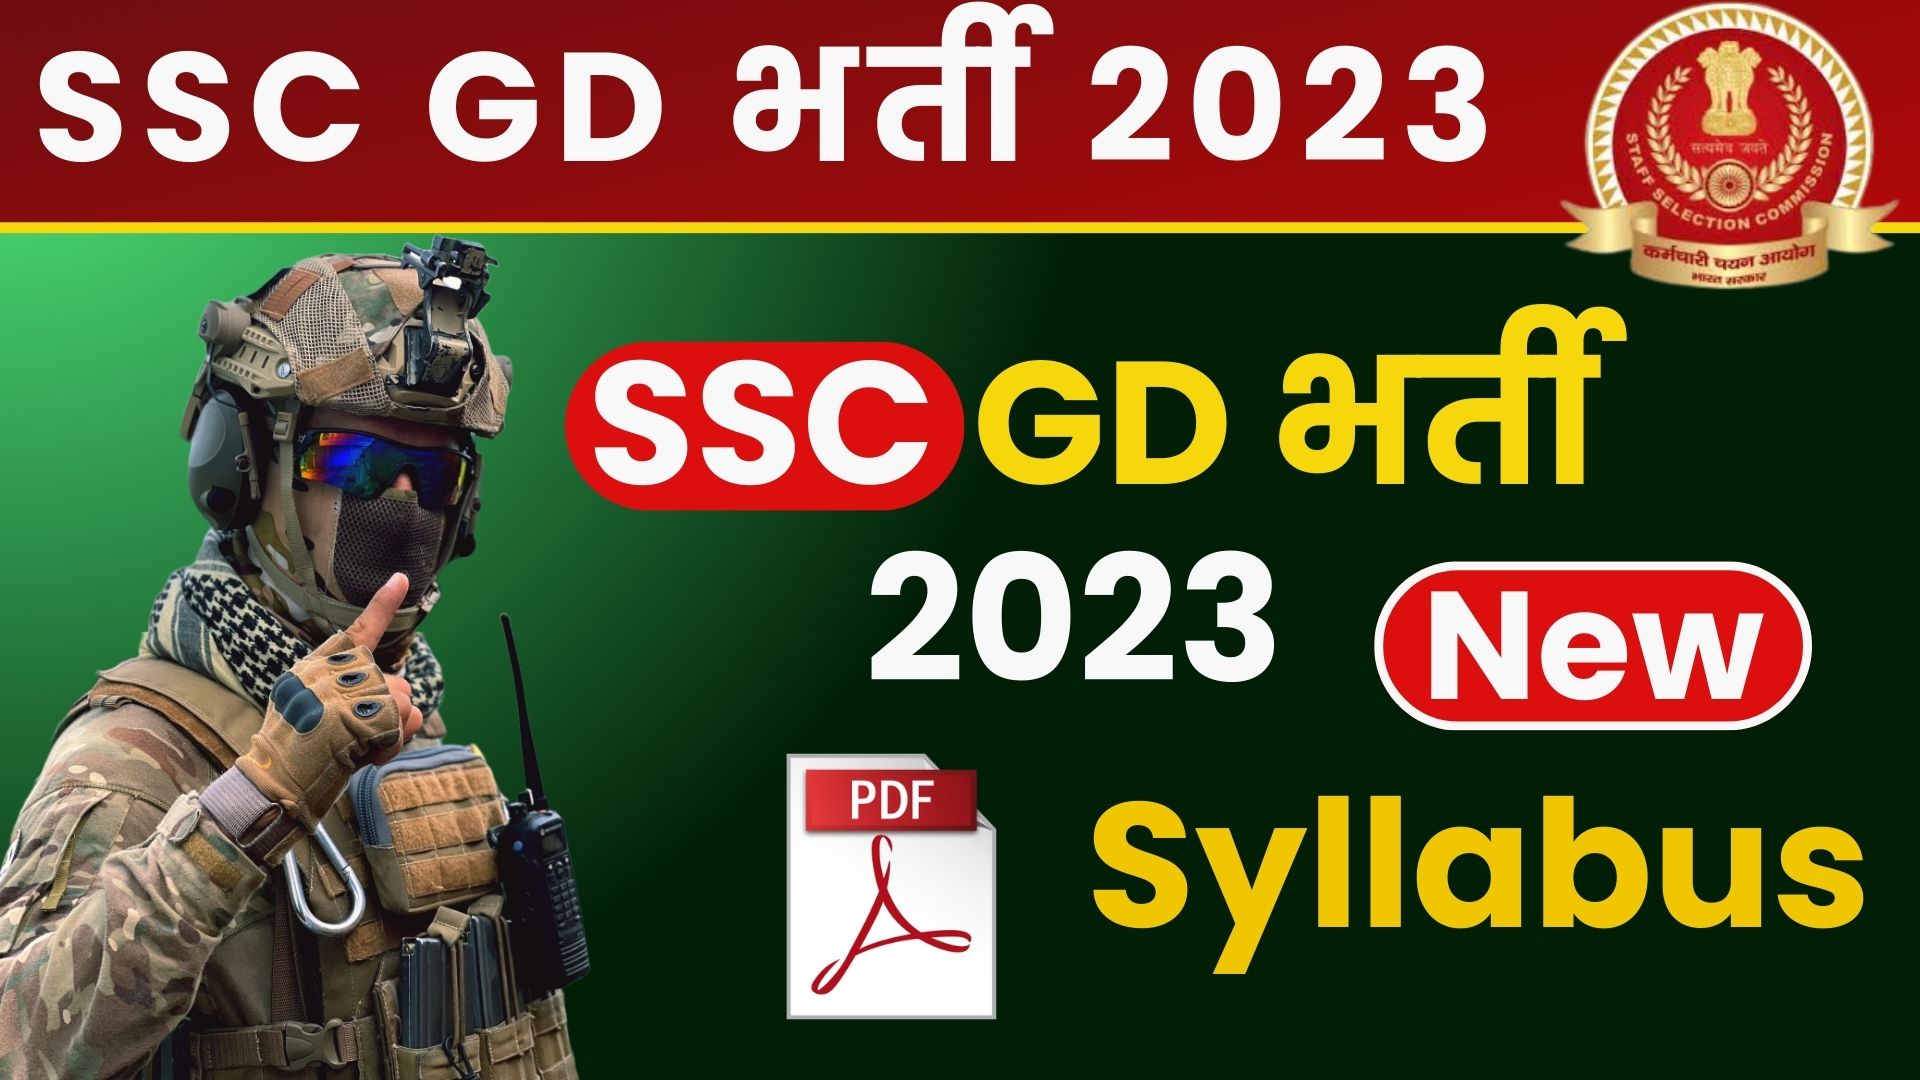 2023 SSC GD Syllabus in Hindi